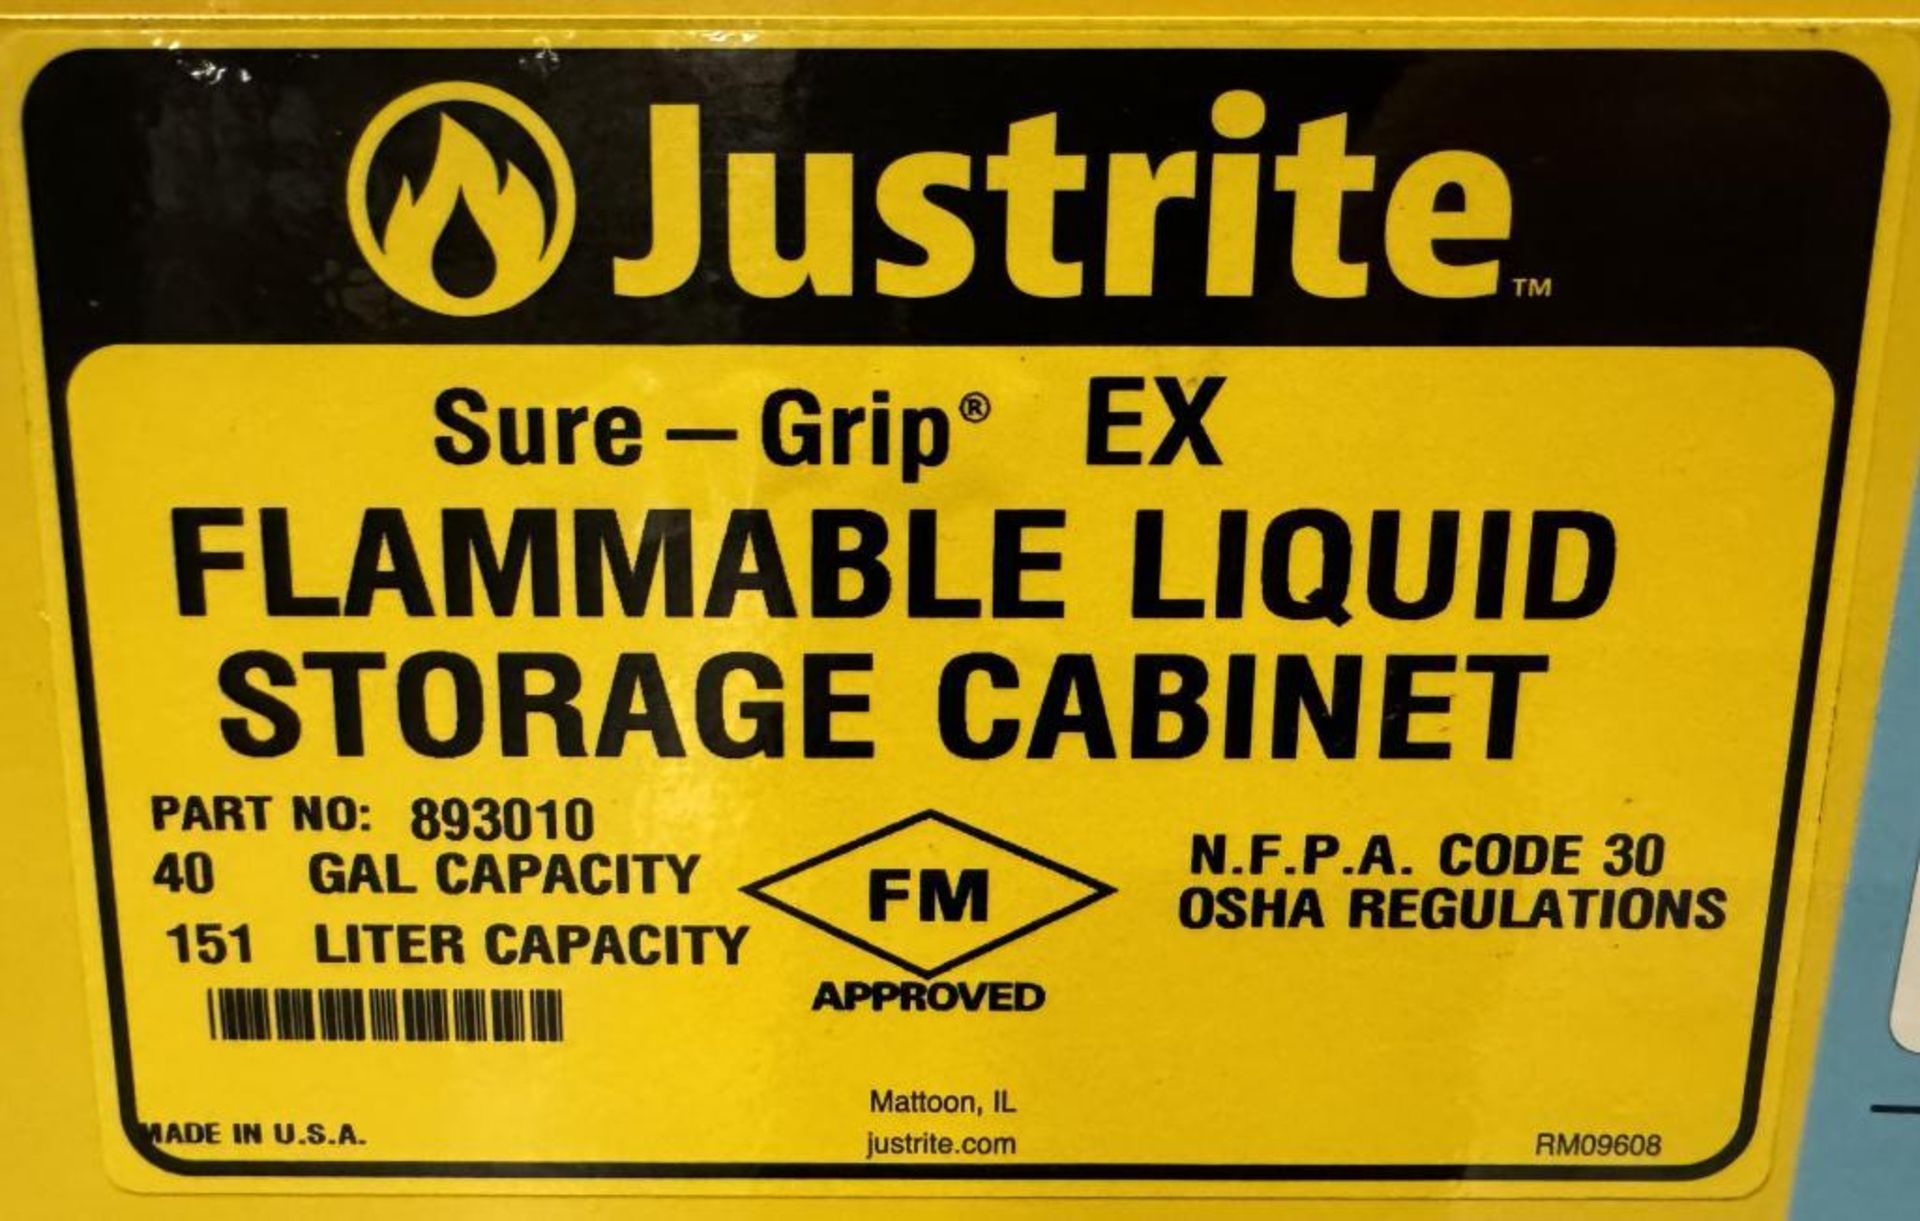 Justrite Sure-Grip EX 40 Gallon Capacity Flammable Storage Cabinet, Model 893010. - Image 3 of 3